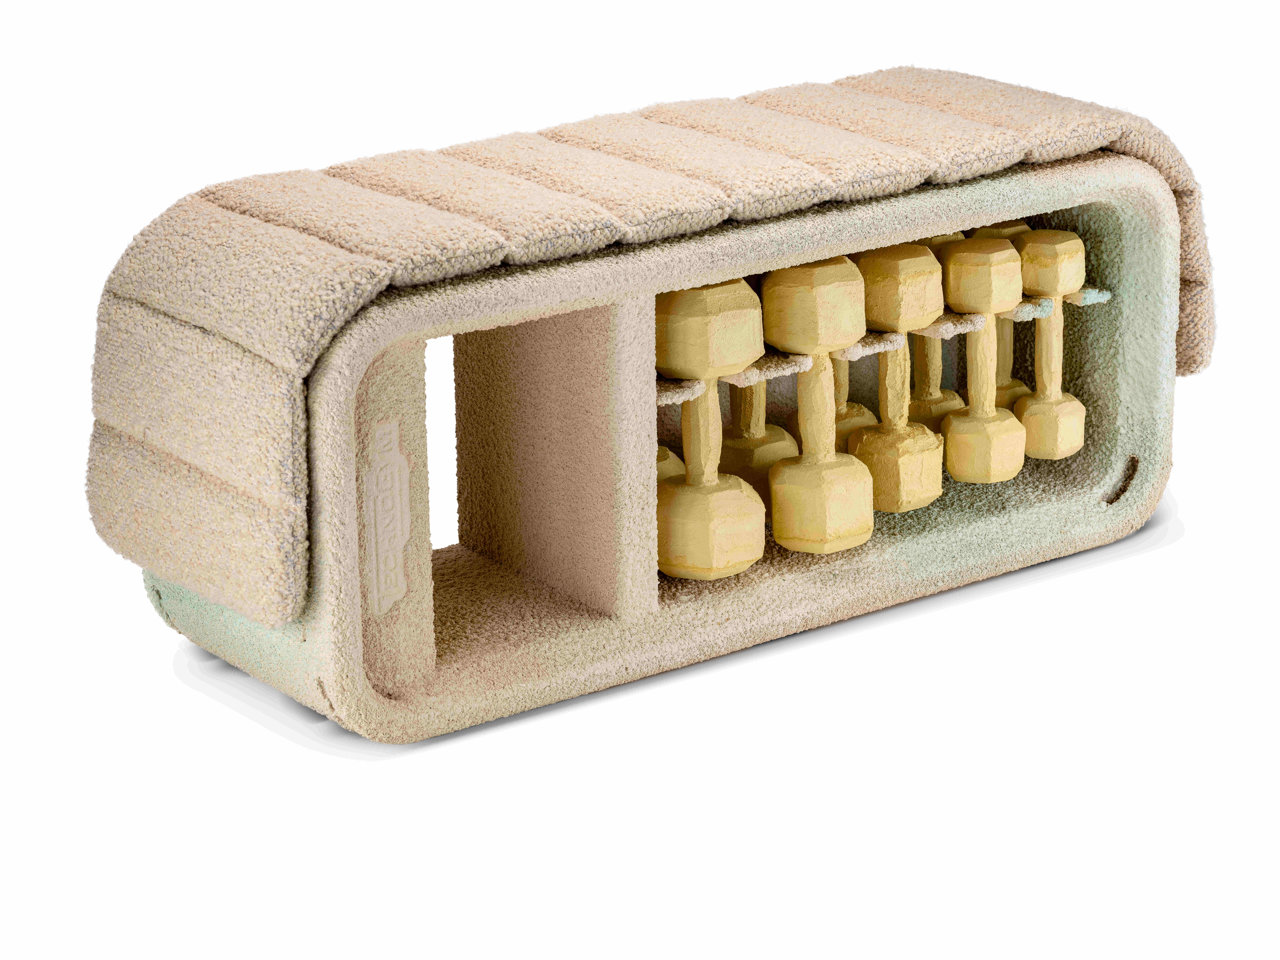 'Technogym Bench' de Patricia Urquiola.